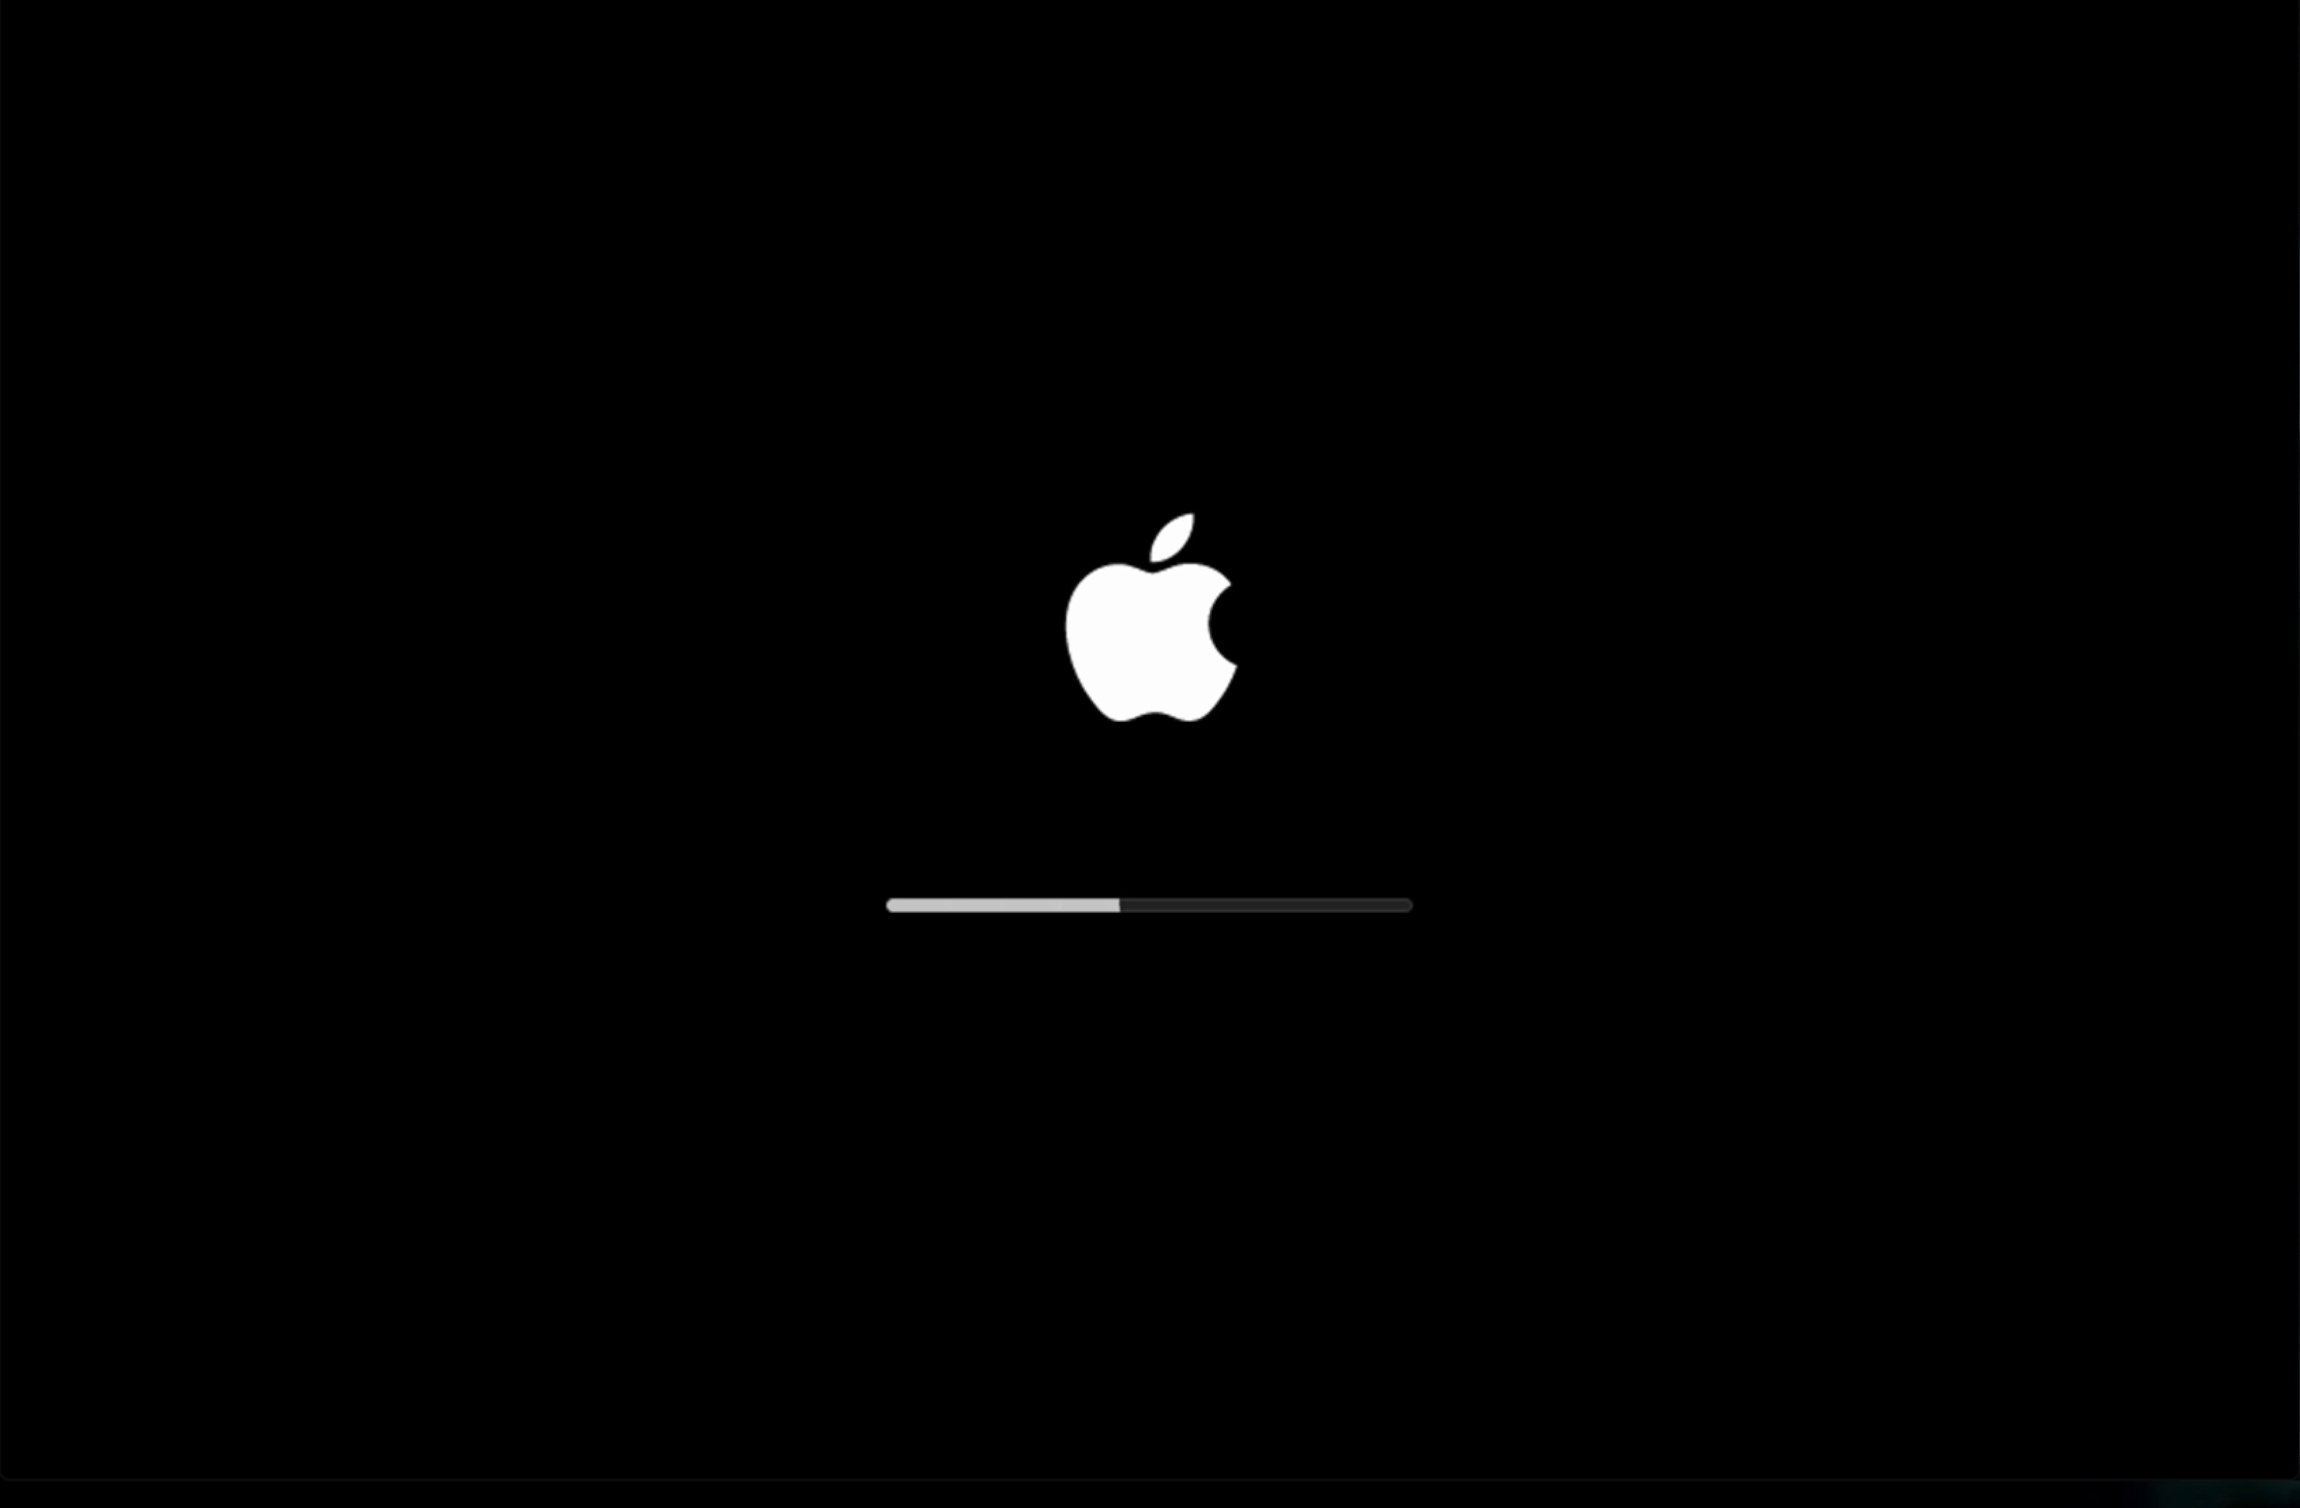 macOS 10.14 Mojave Bootup Screen (2018)